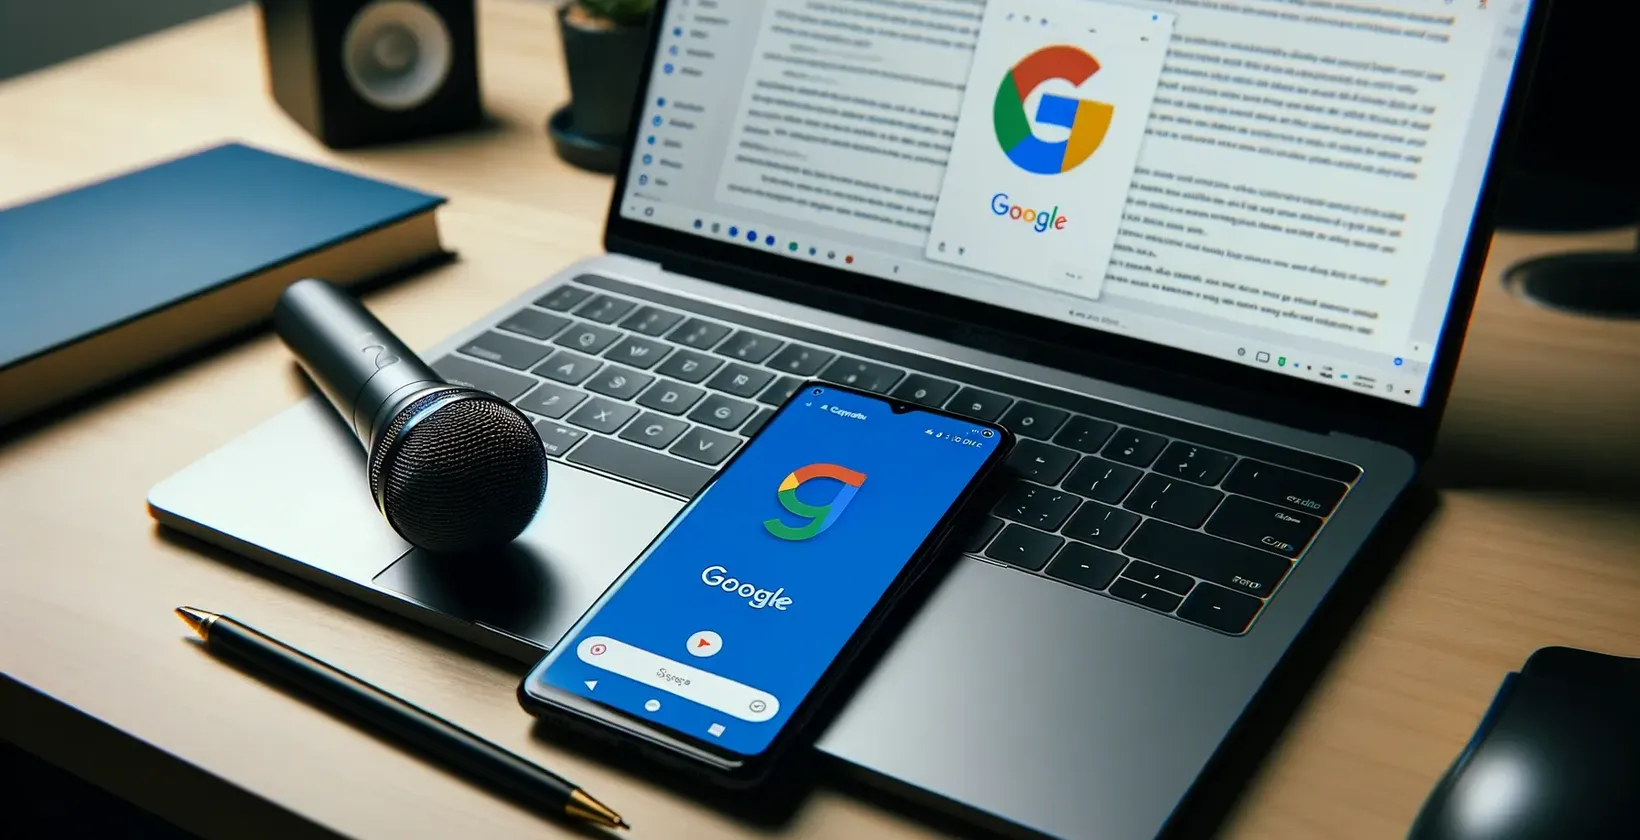 Ruang kerja terfokus Google dengan laptop yang menunjukkan dokumen, smartphone dengan logo, mikrofon pada panel sentuh, dan pena notebook.